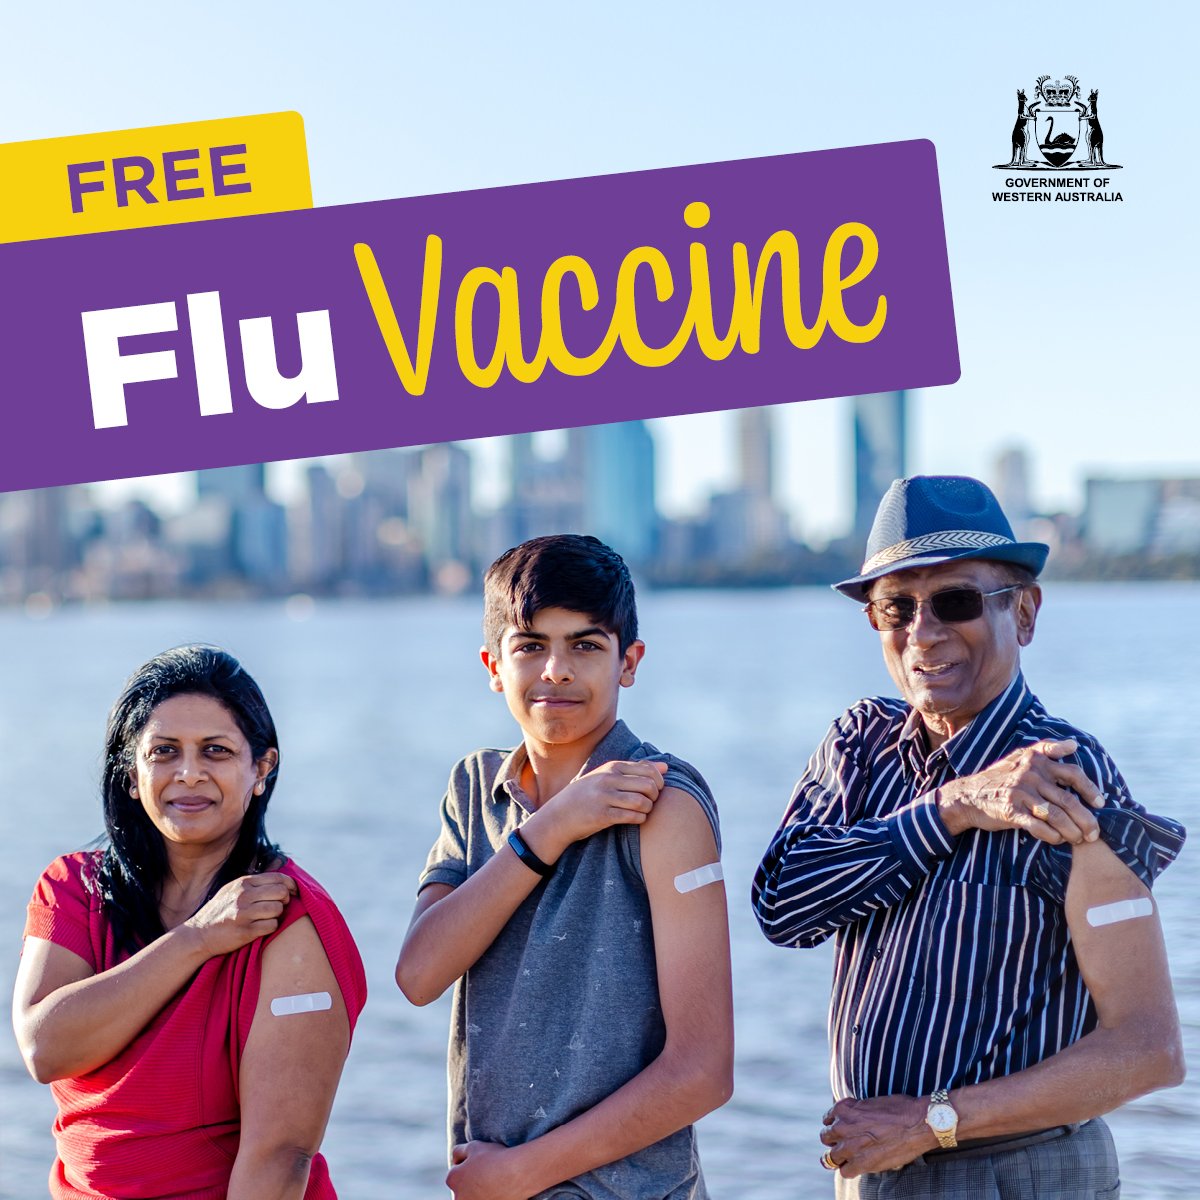 Free flu vaccine